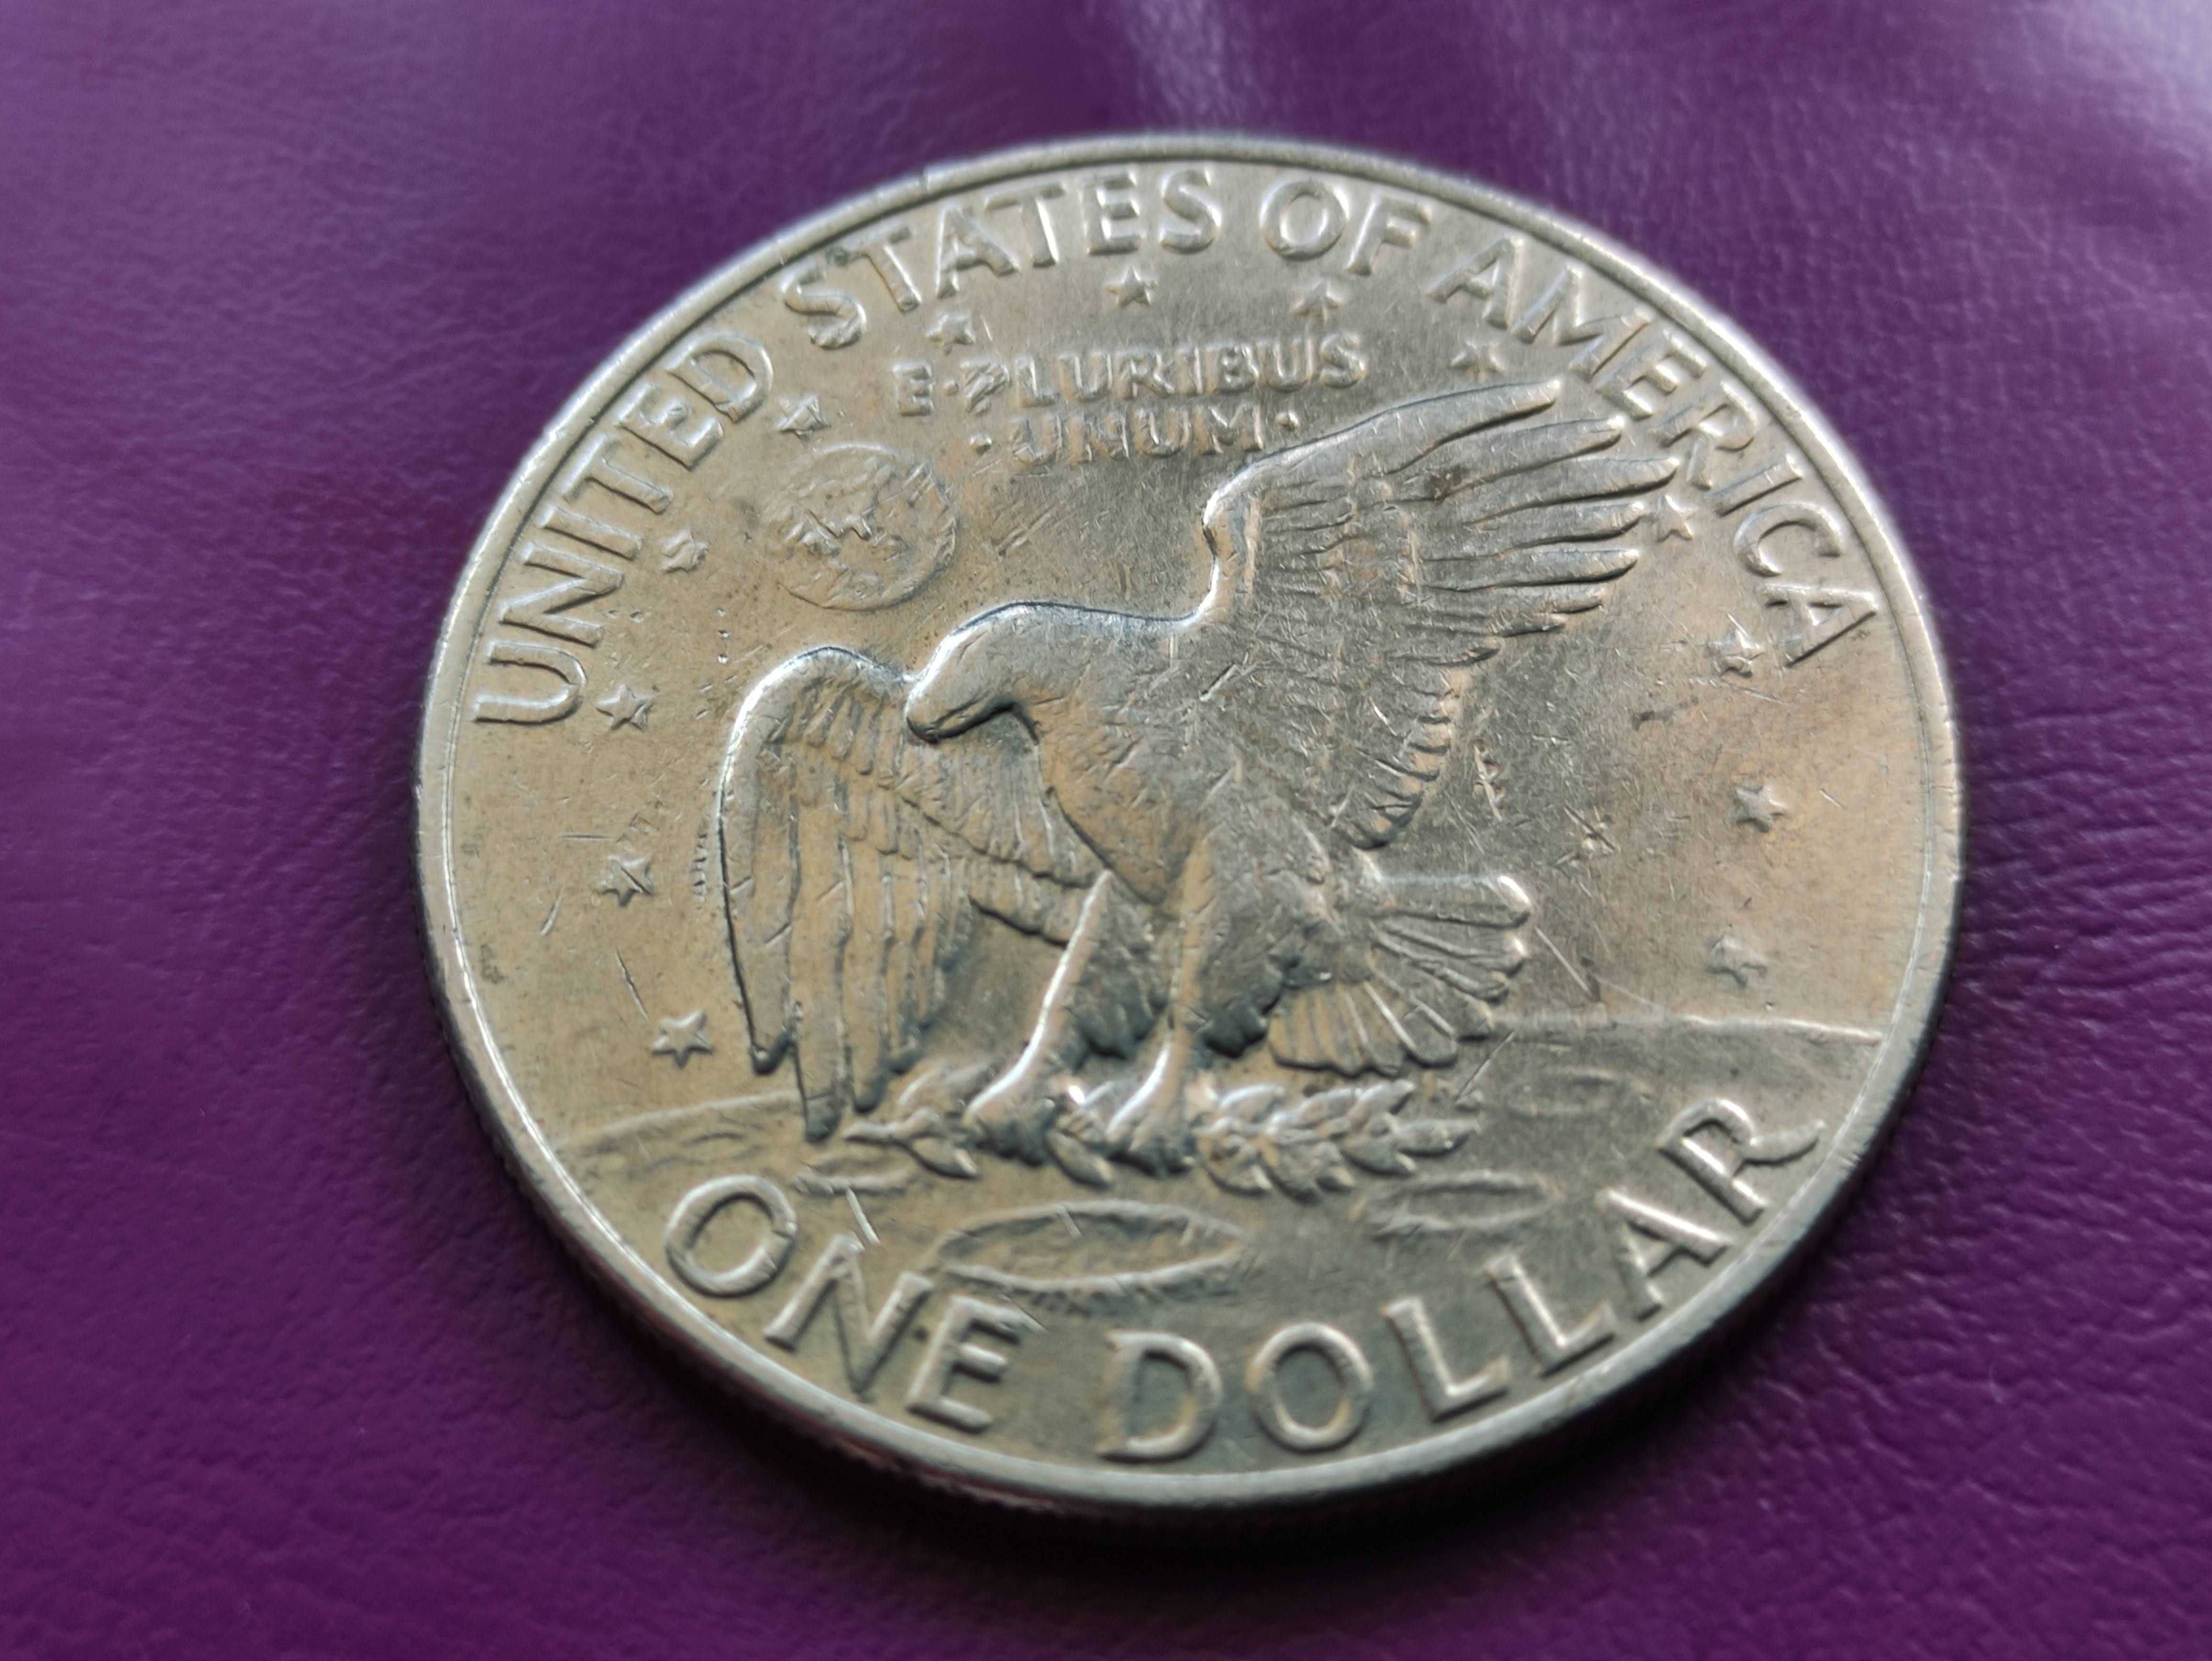 Moneta 1 DOLLAR 1972 z literką D (EISENHOWER - ORZEŁ) - ŁADNA